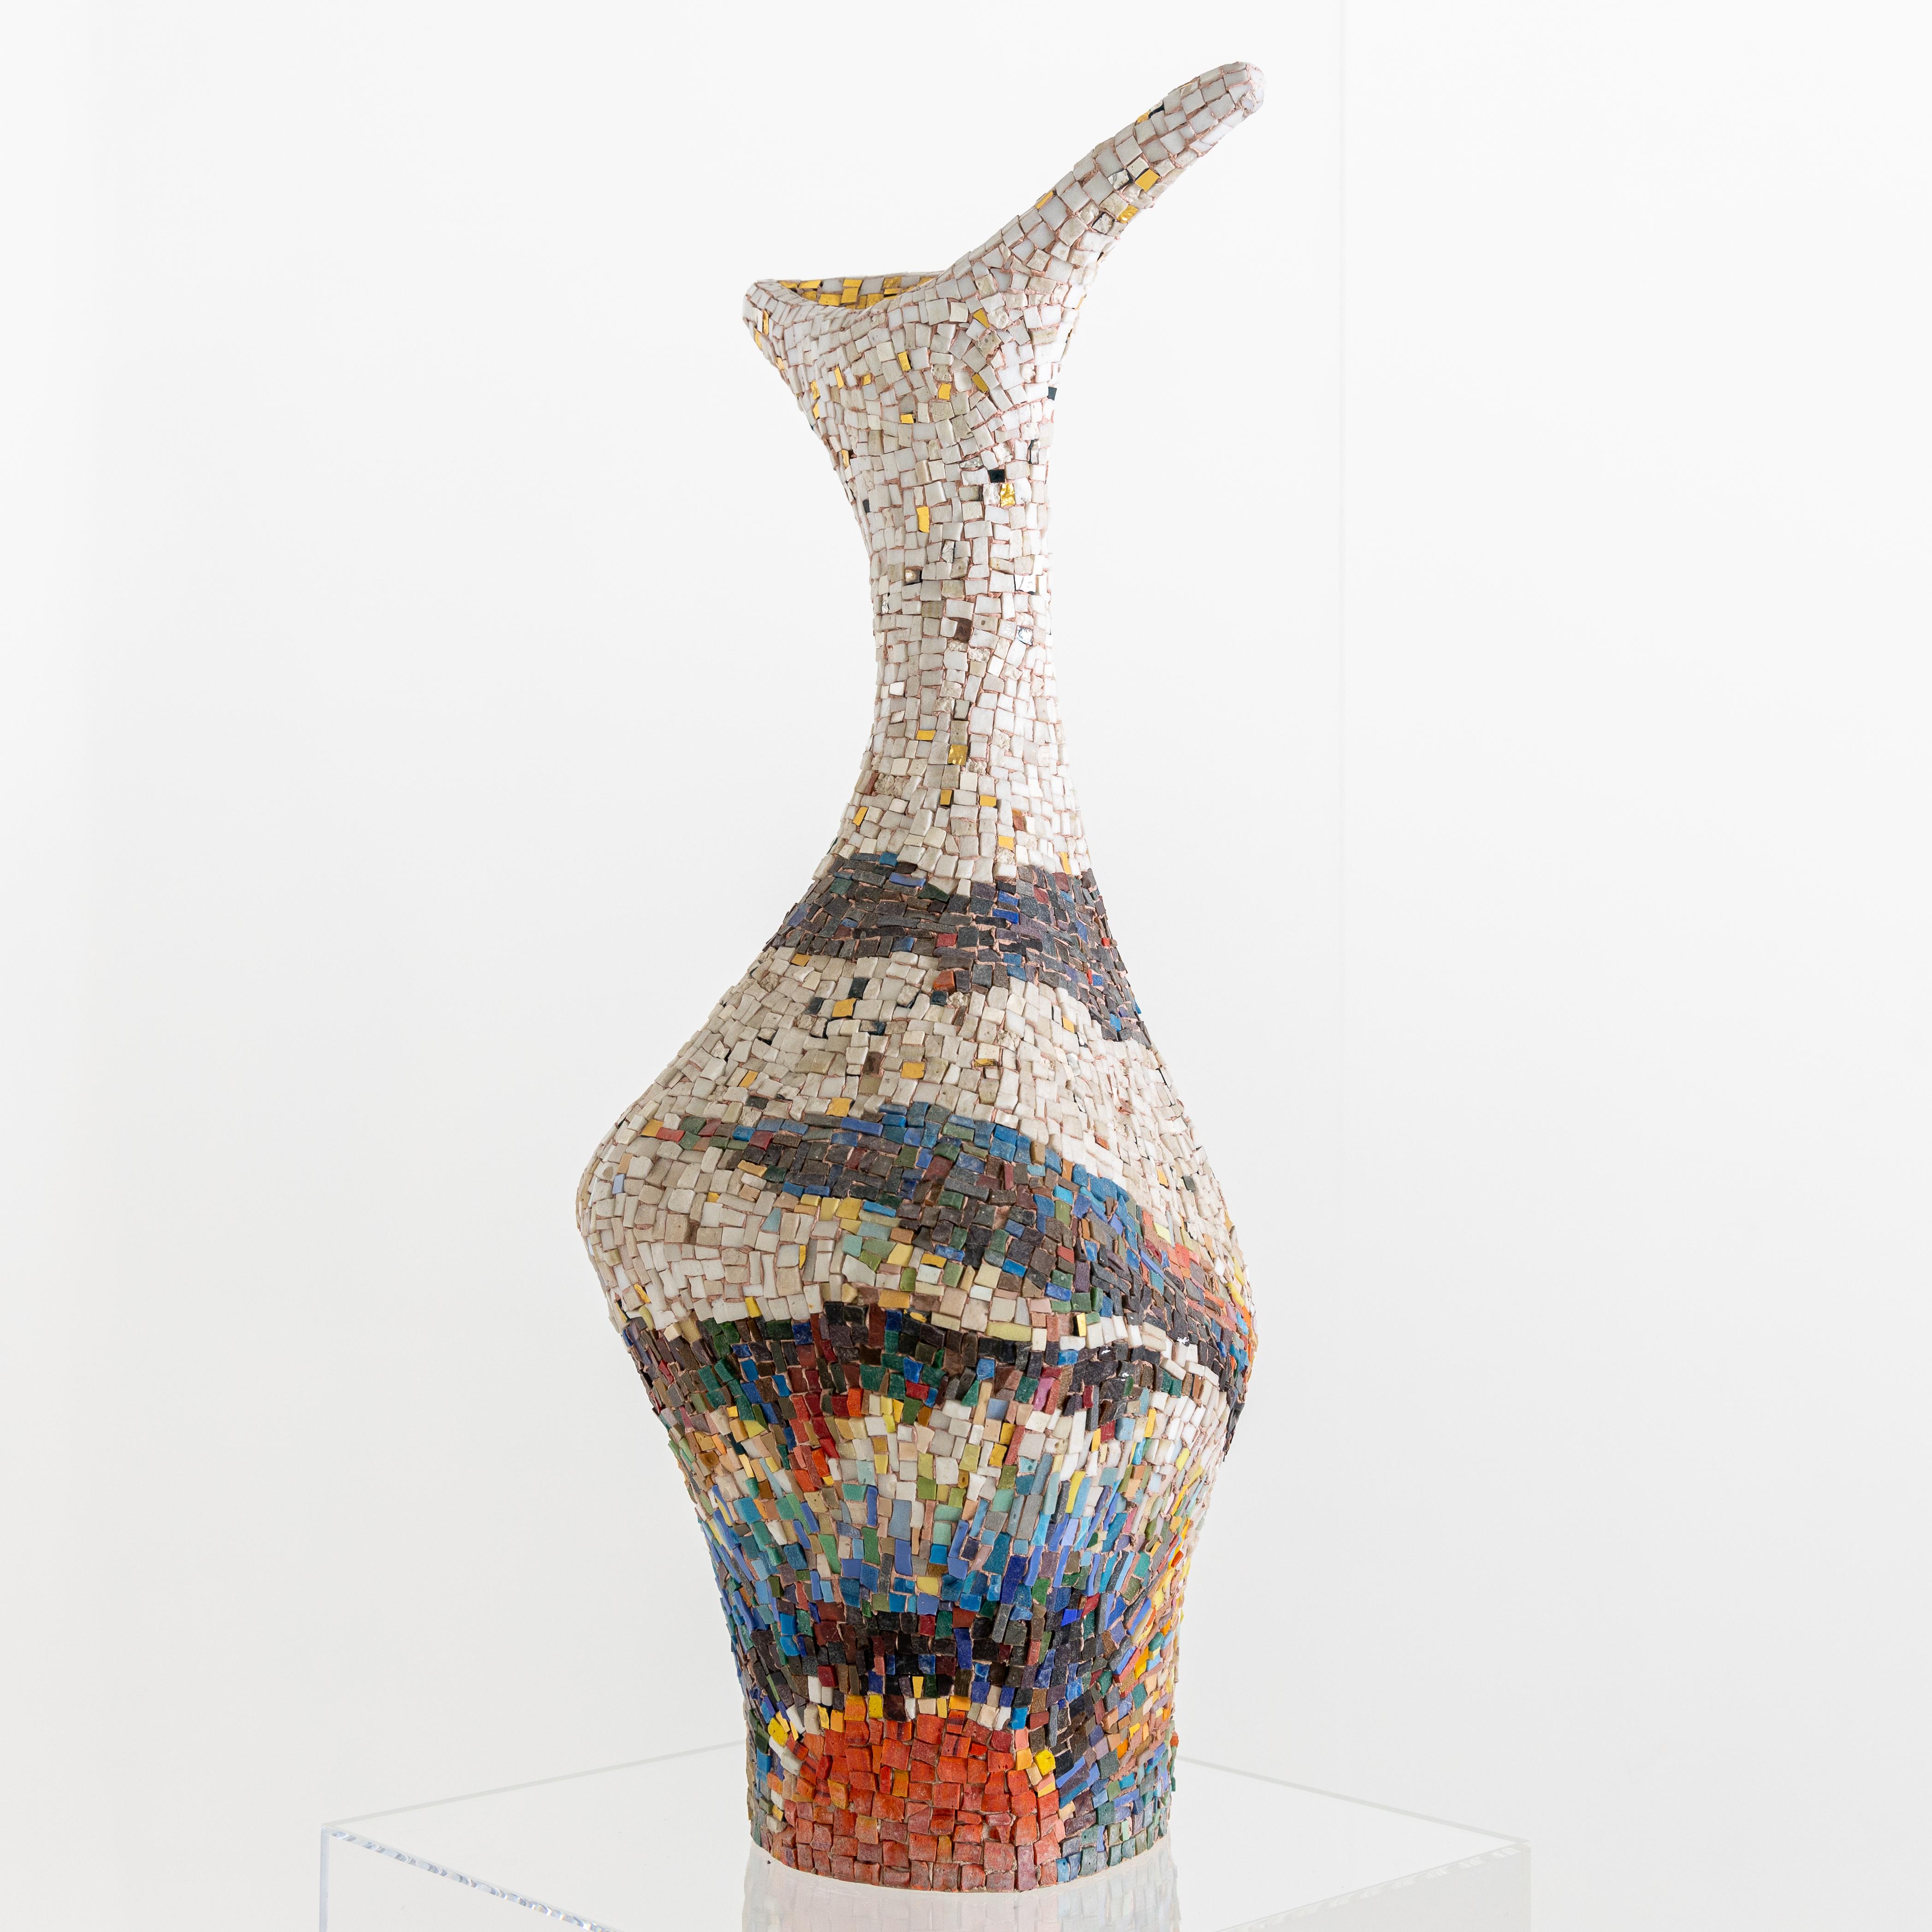 Large decorative Italian Modernist floor vase with colorful mosaic tile work.